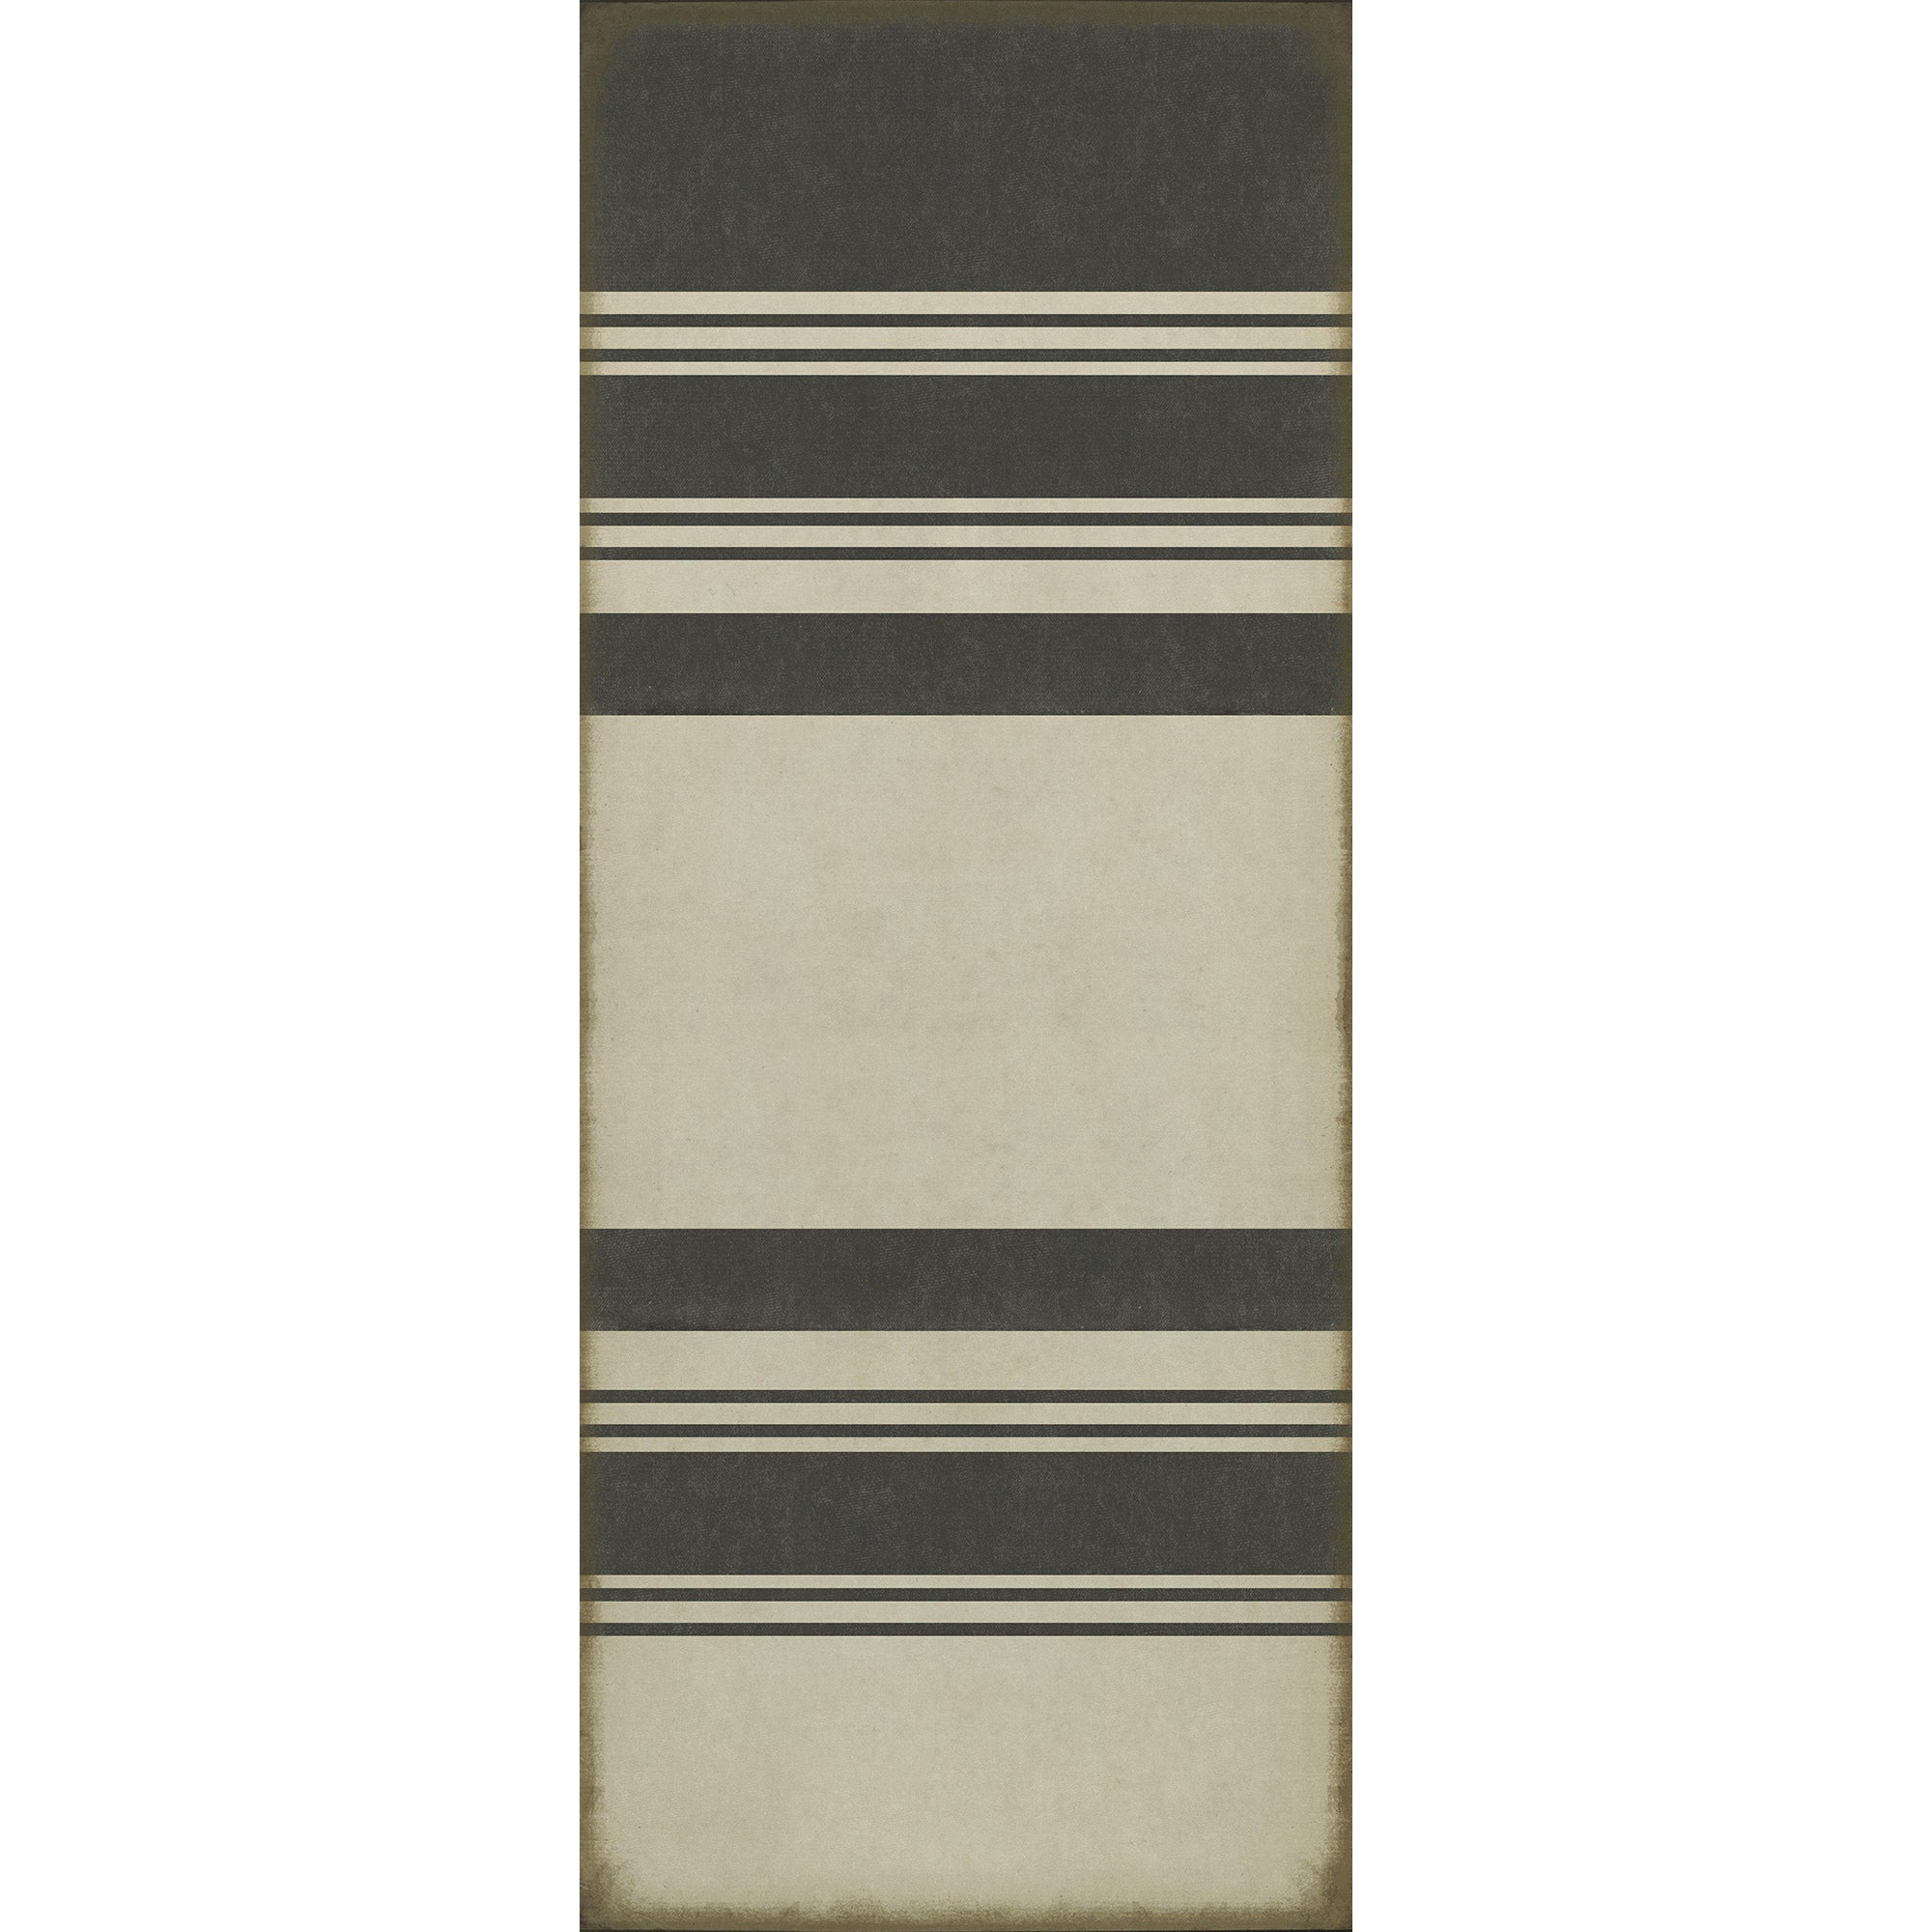 Pattern 50 Organic Stripes Black and White Vinyl Floor Cloth